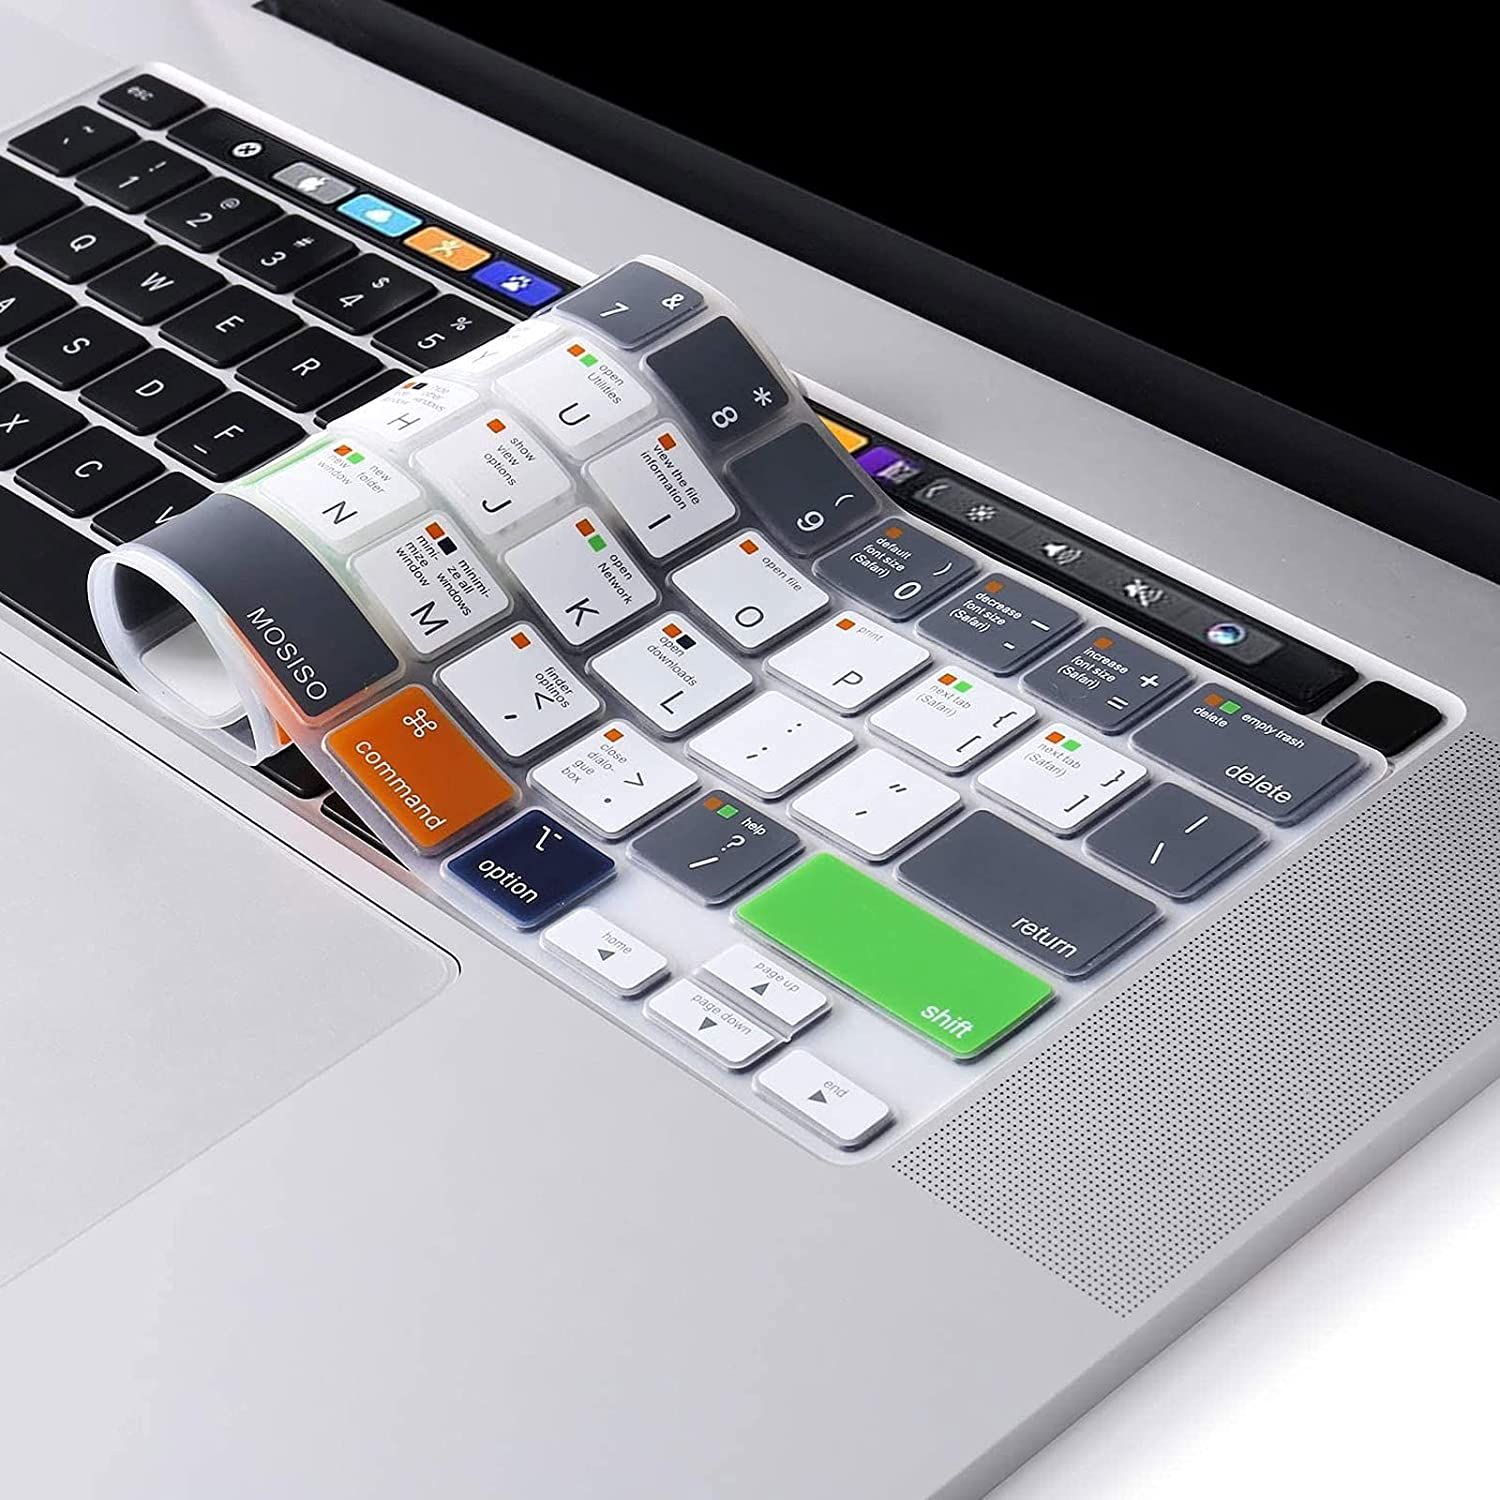 Mosiso Keyboard Cover application